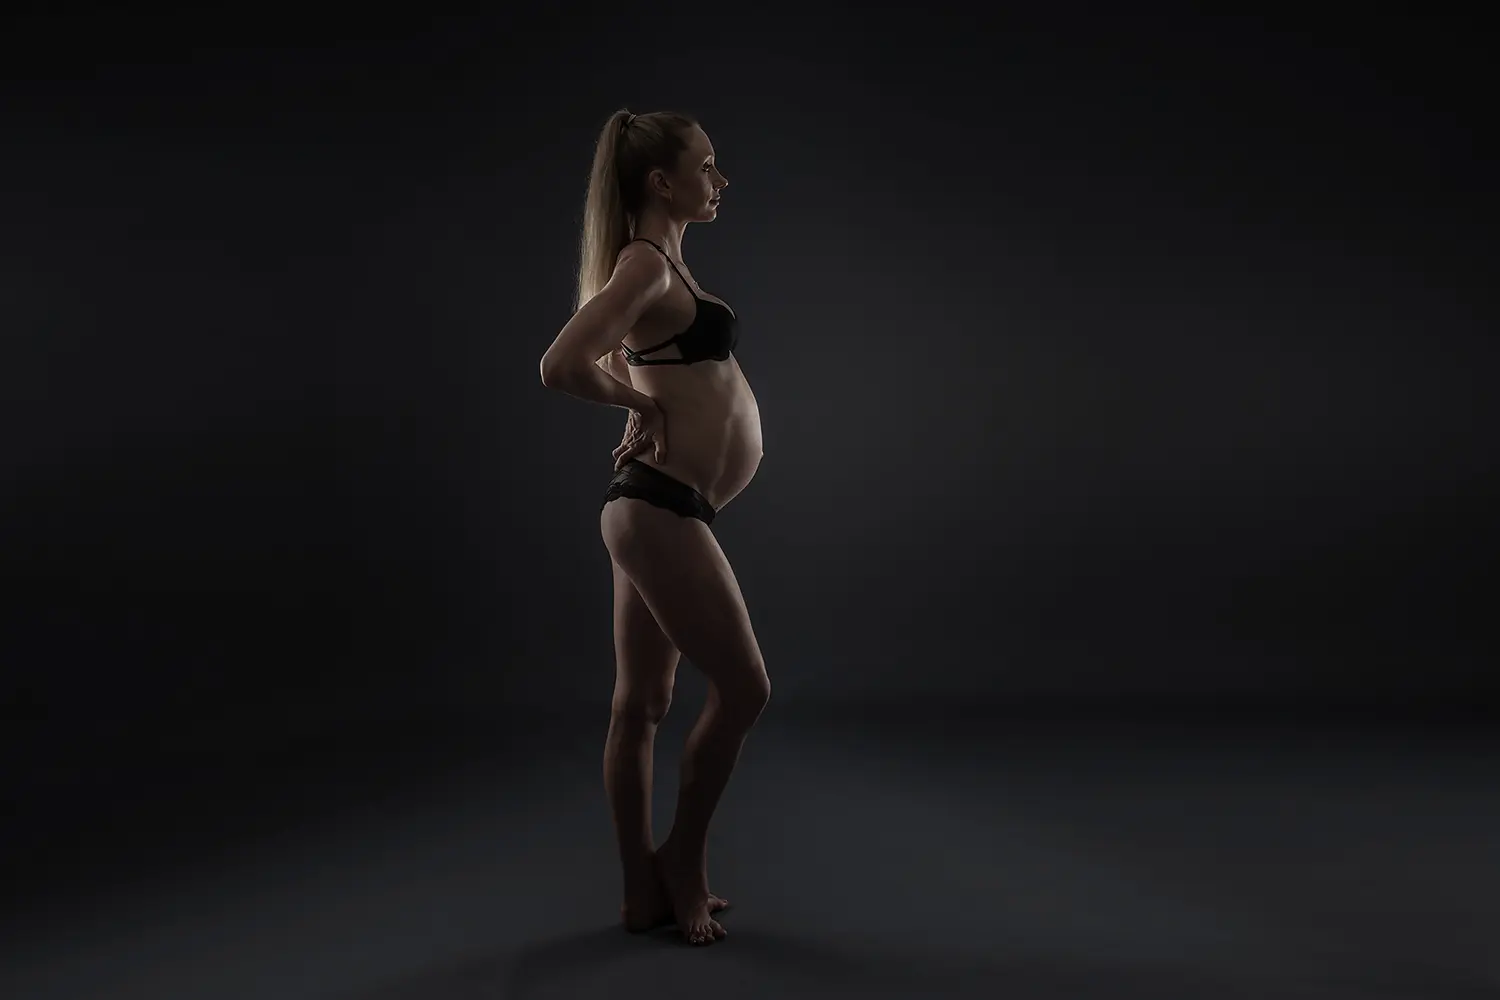 Pregnant woman against dark background